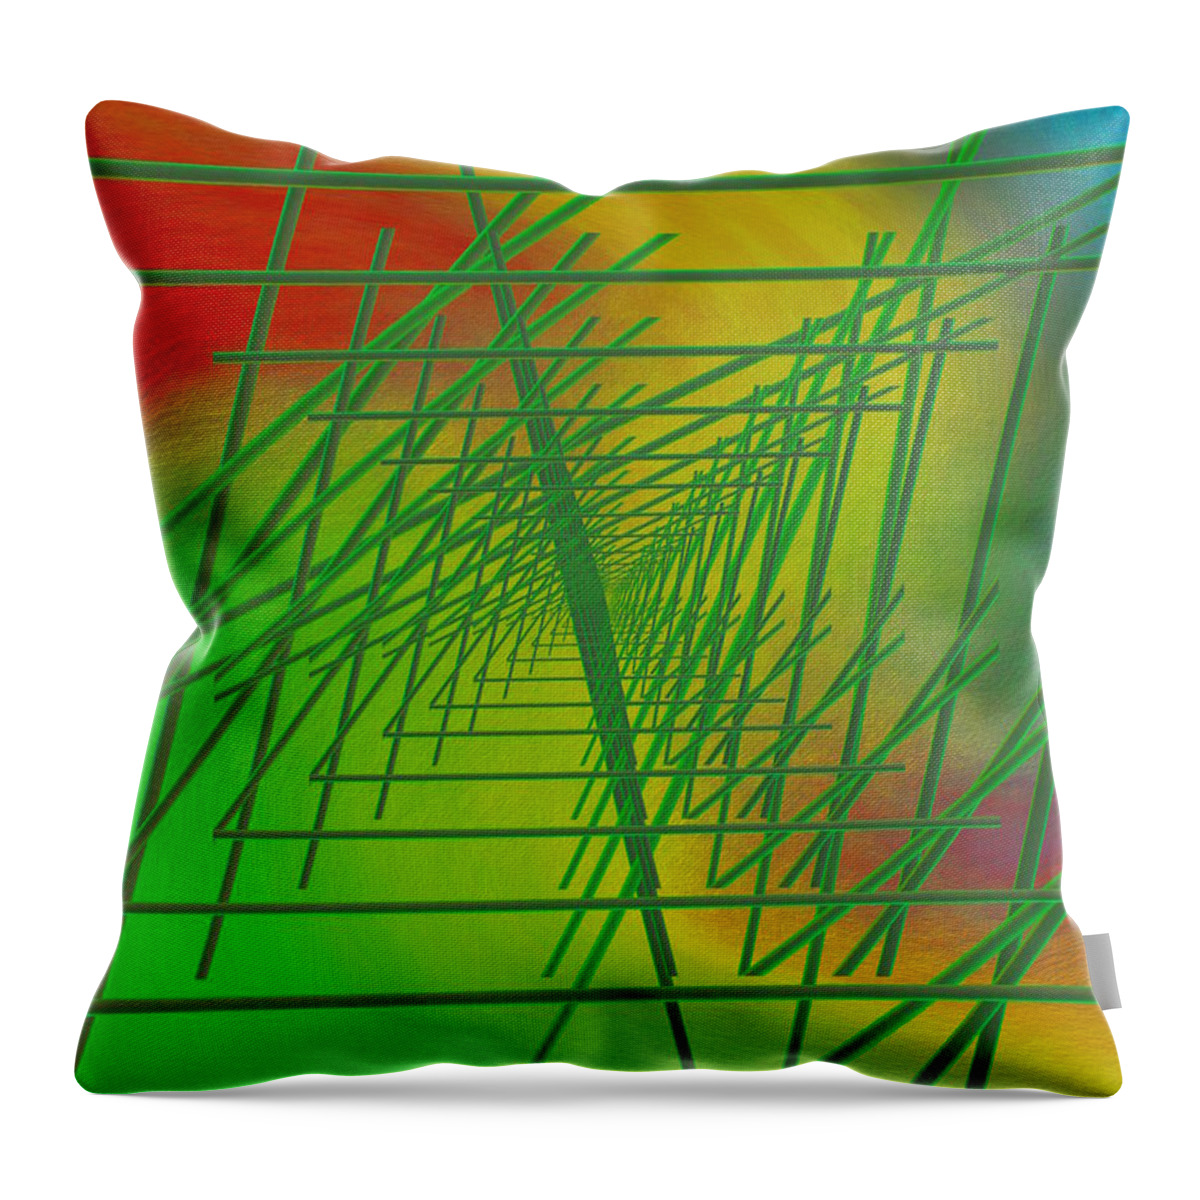 Abstract Throw Pillow featuring the digital art The Latticework 6 by Tim Allen